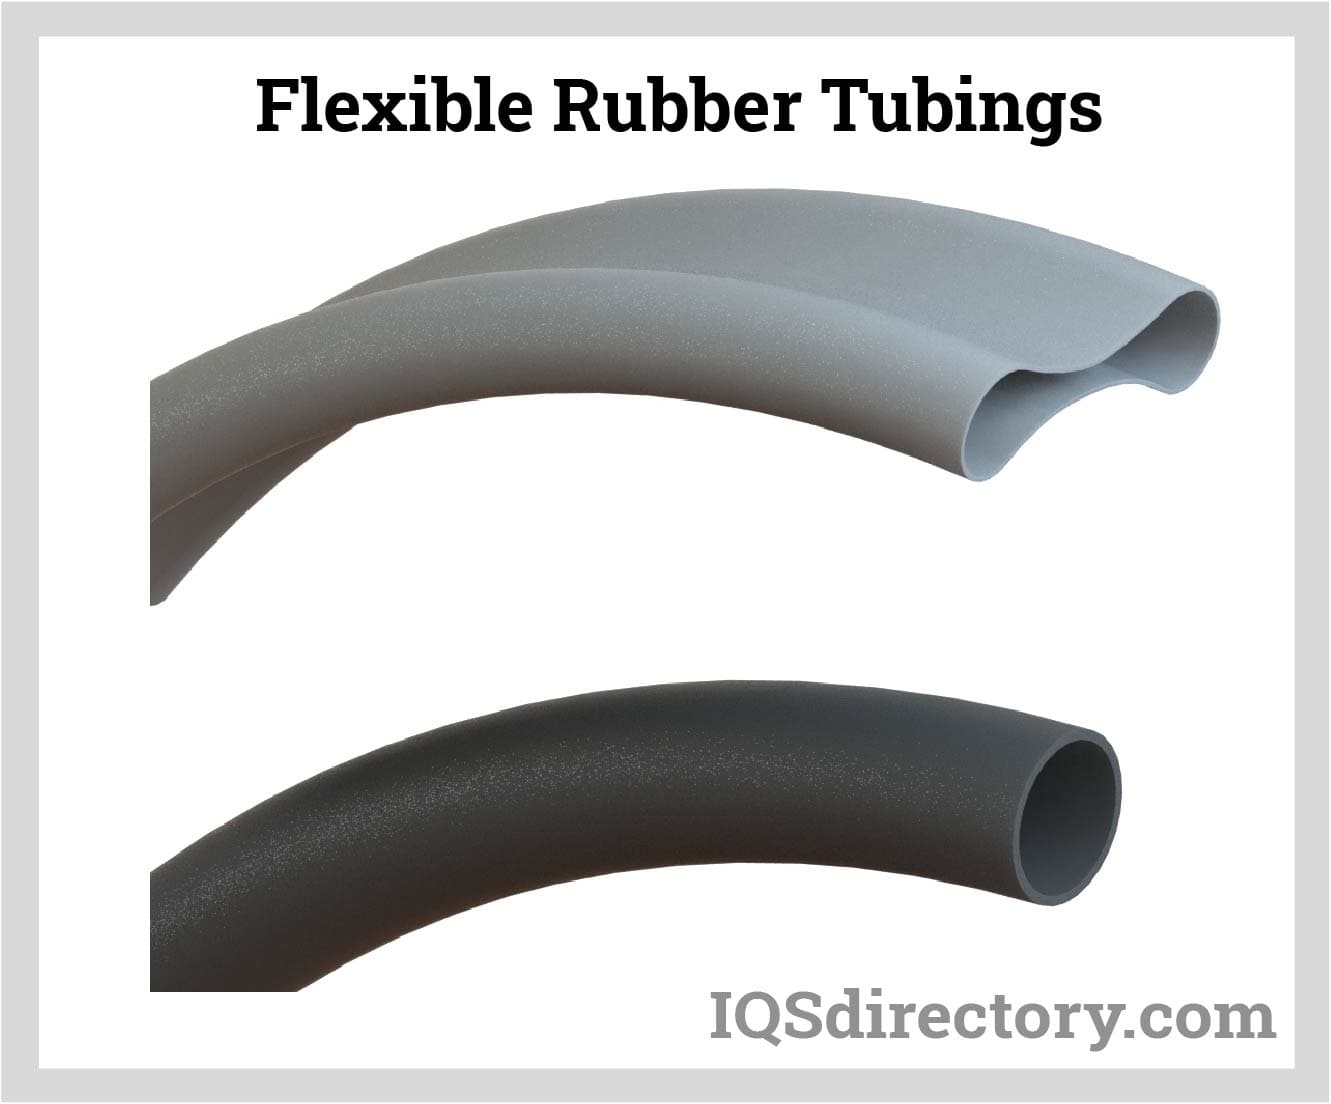 Flexible Rubber Tubing